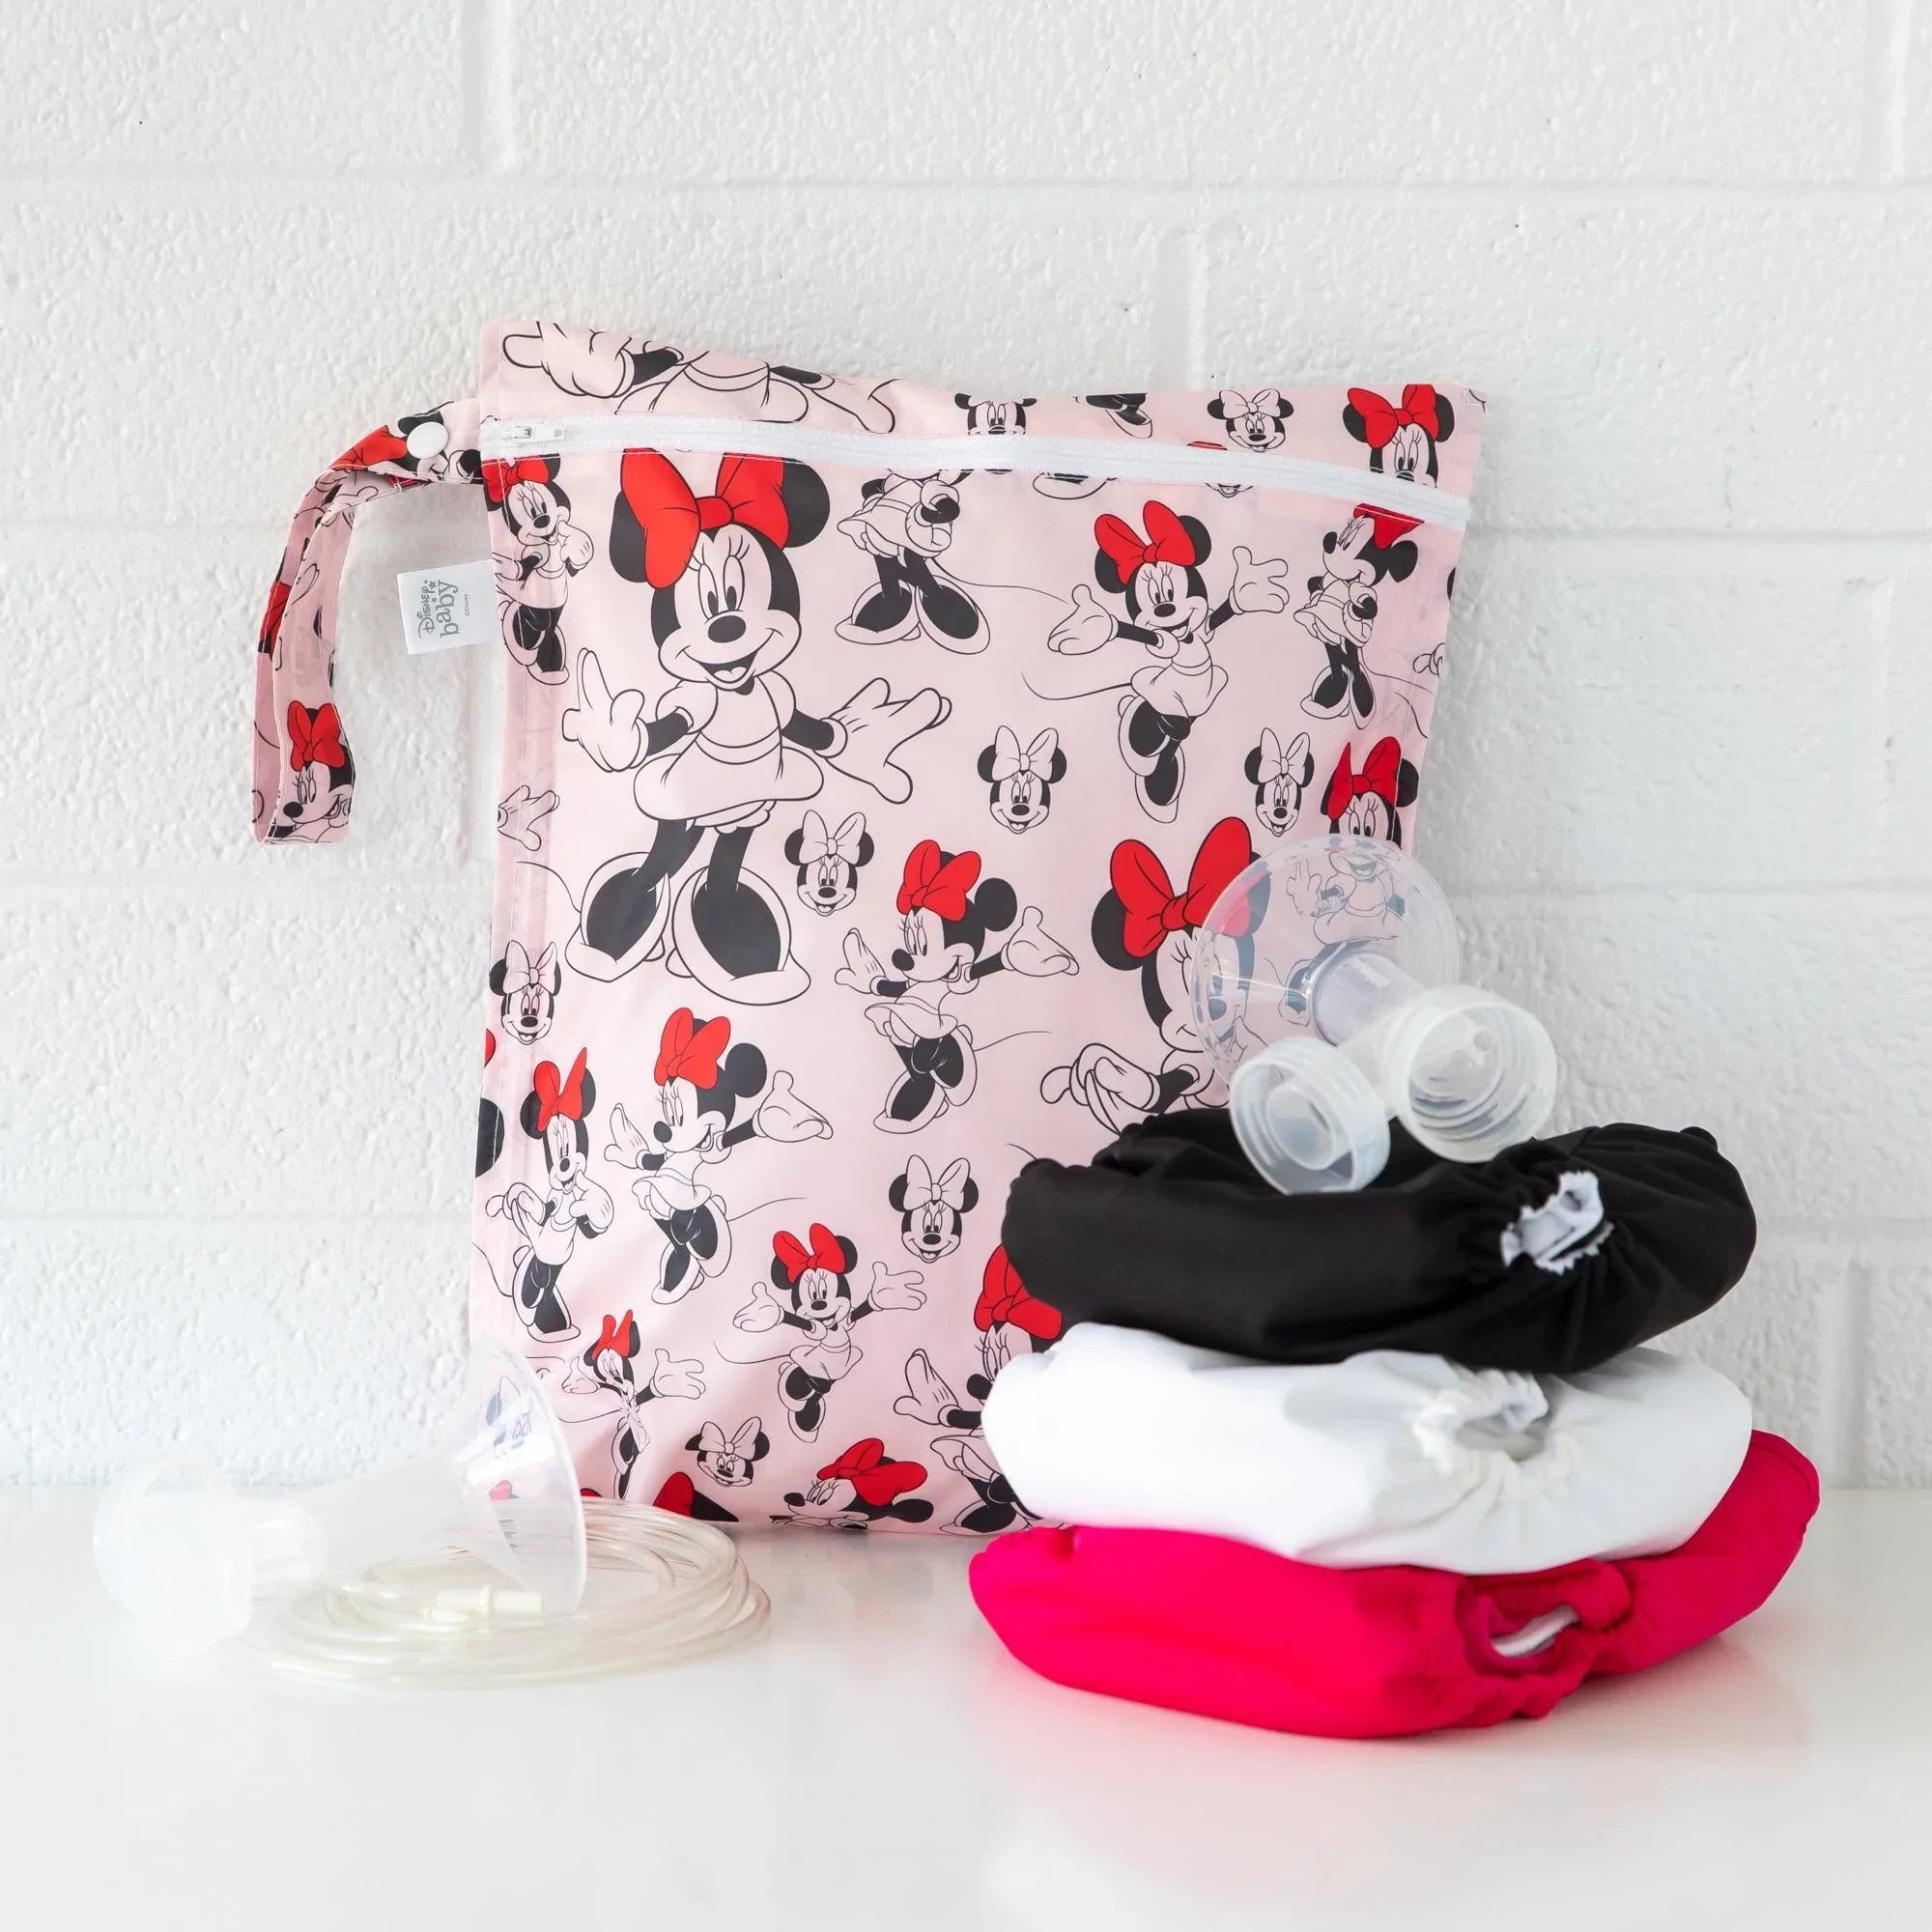 Wet Bag: Minnie Mouse Classic - Bumkins